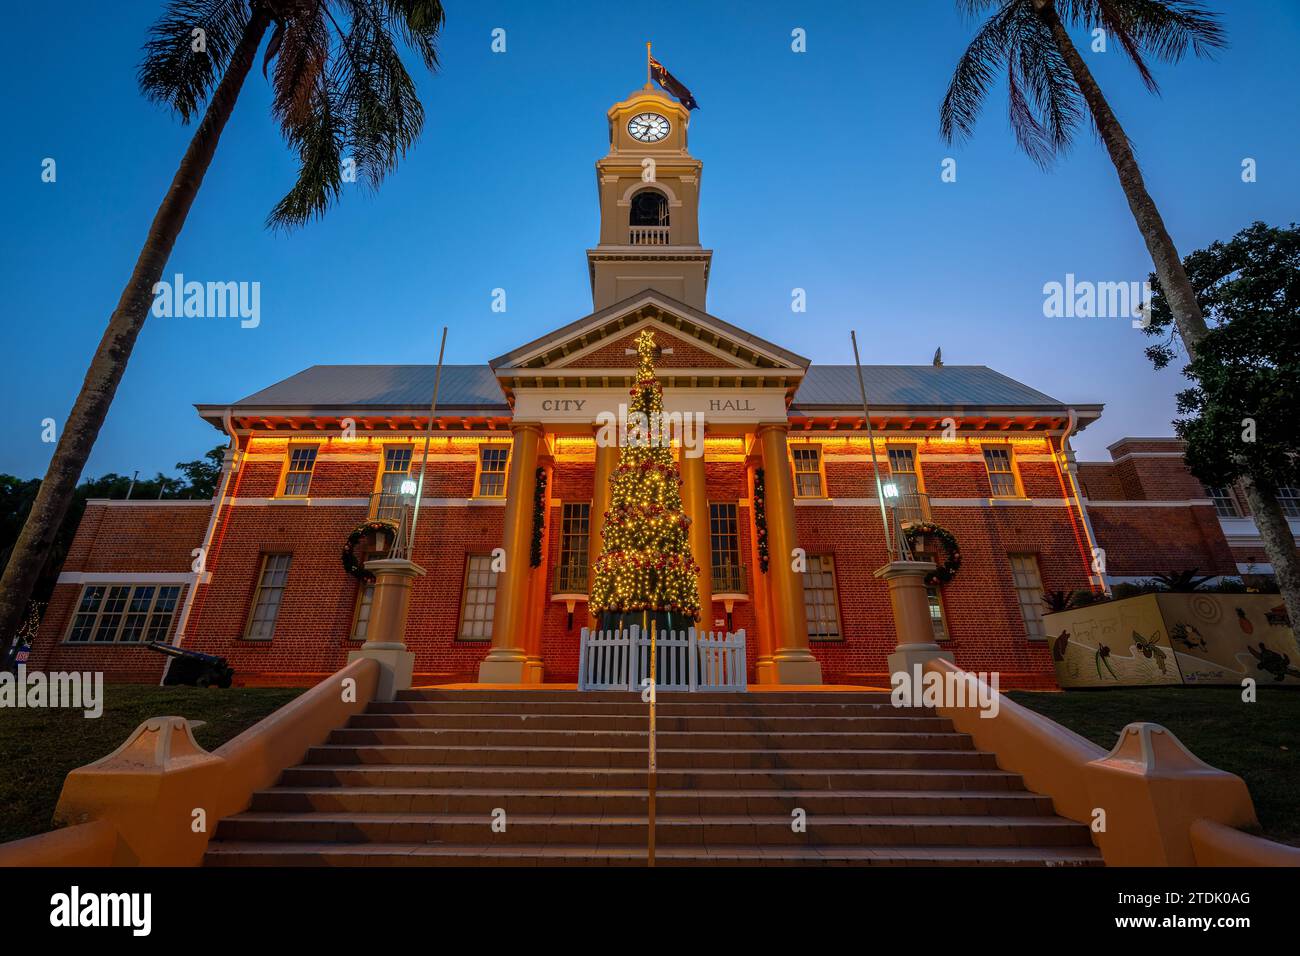 Maryborough, QLD, Australia - City Hall illuminated at night with Christmas decorations Stock Photo